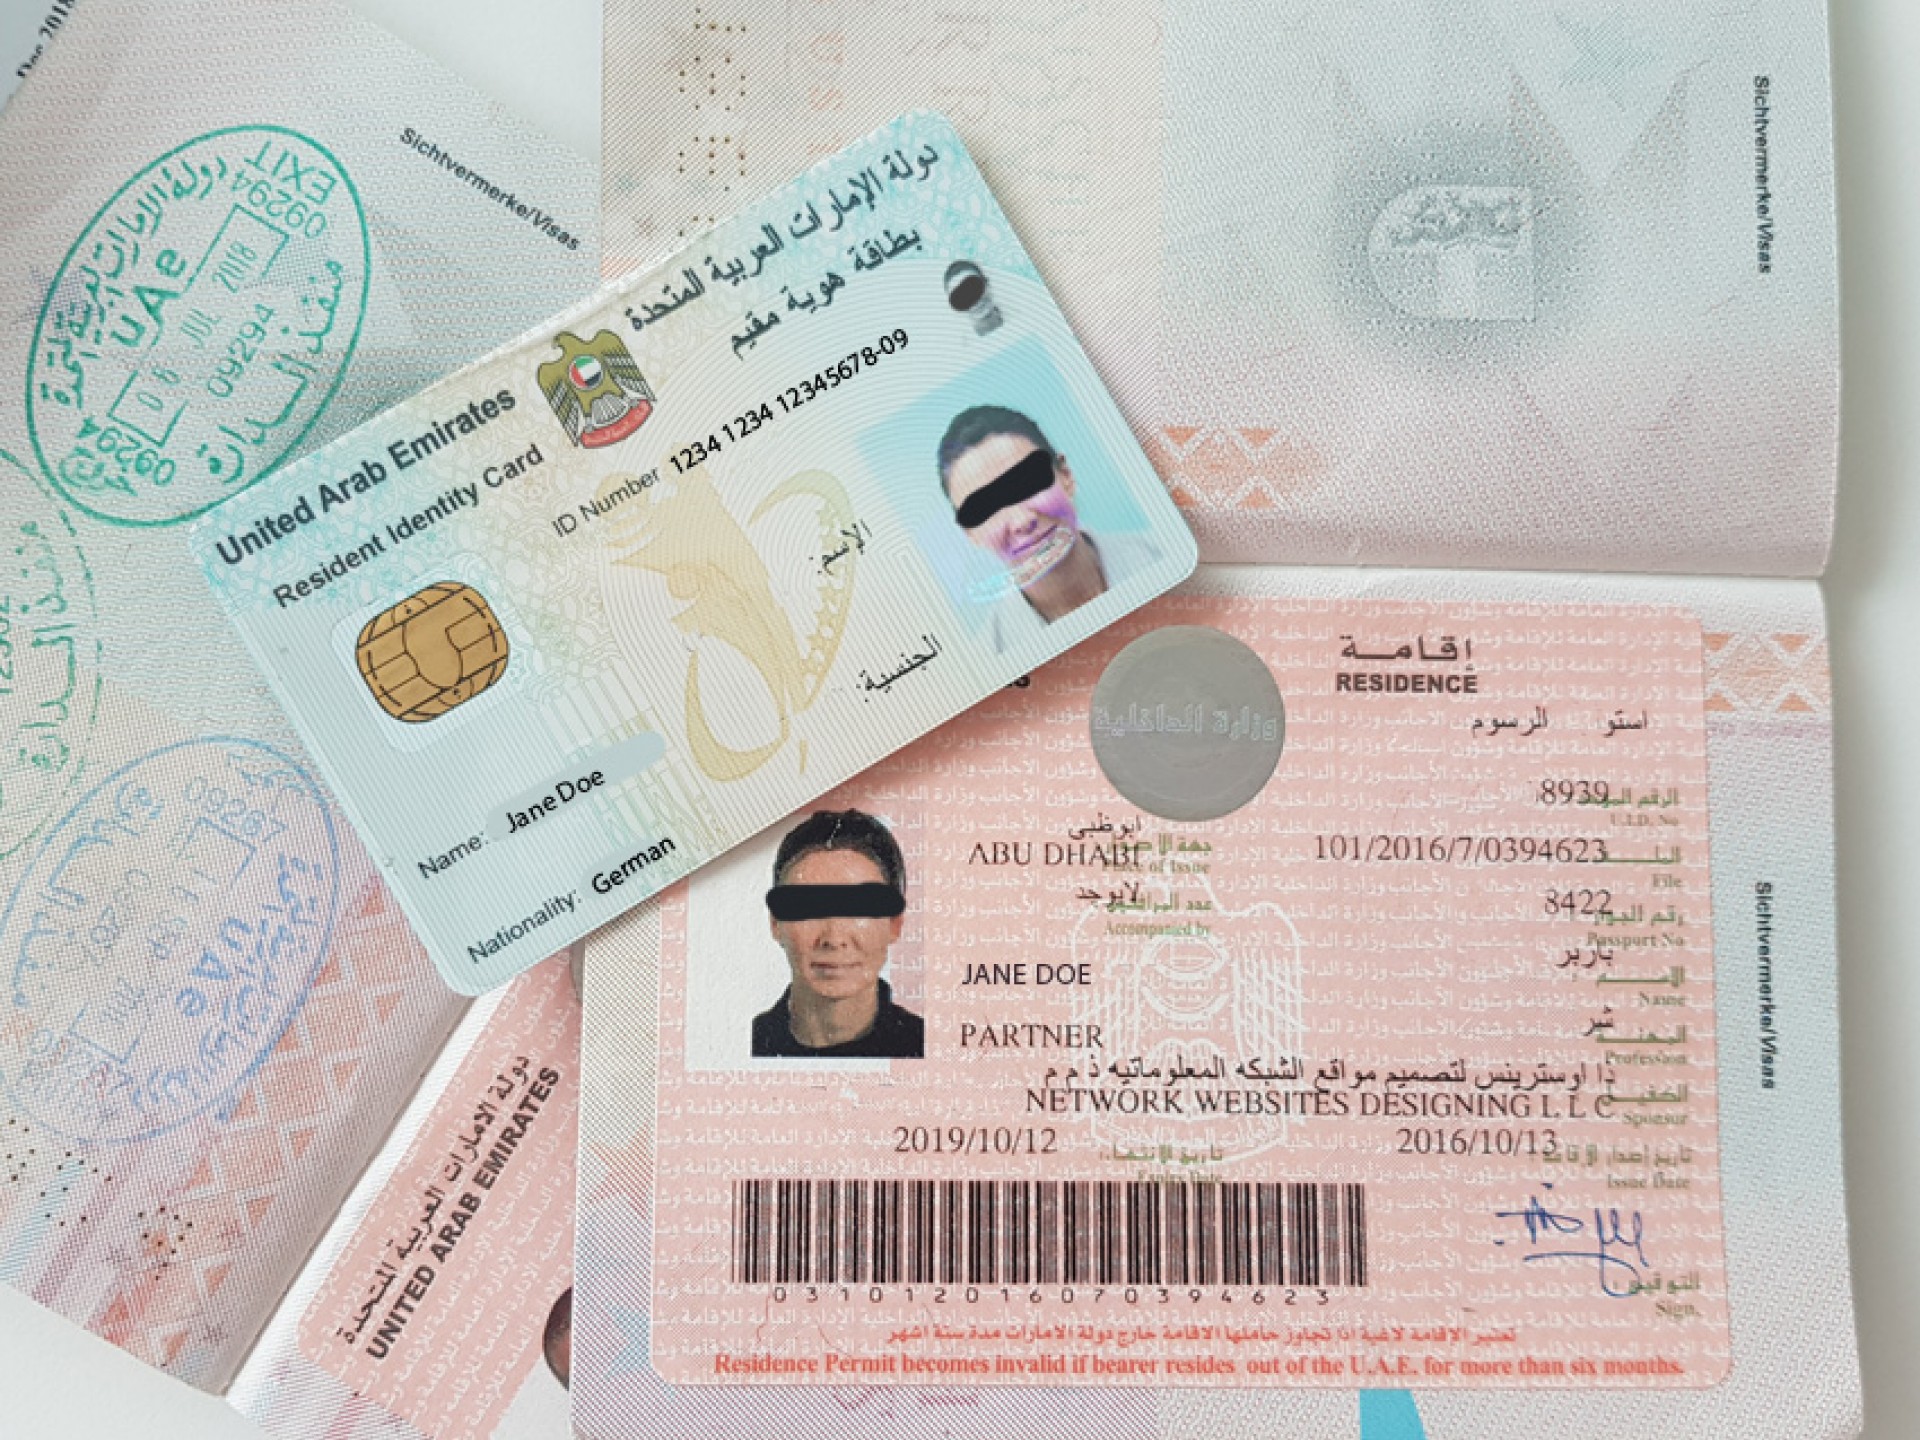 Uae visa. Резидентская виза ОАЭ. Резидентская виза в Дубай. Виза резидента в Дубае. Emirates ID И резидентская виза.